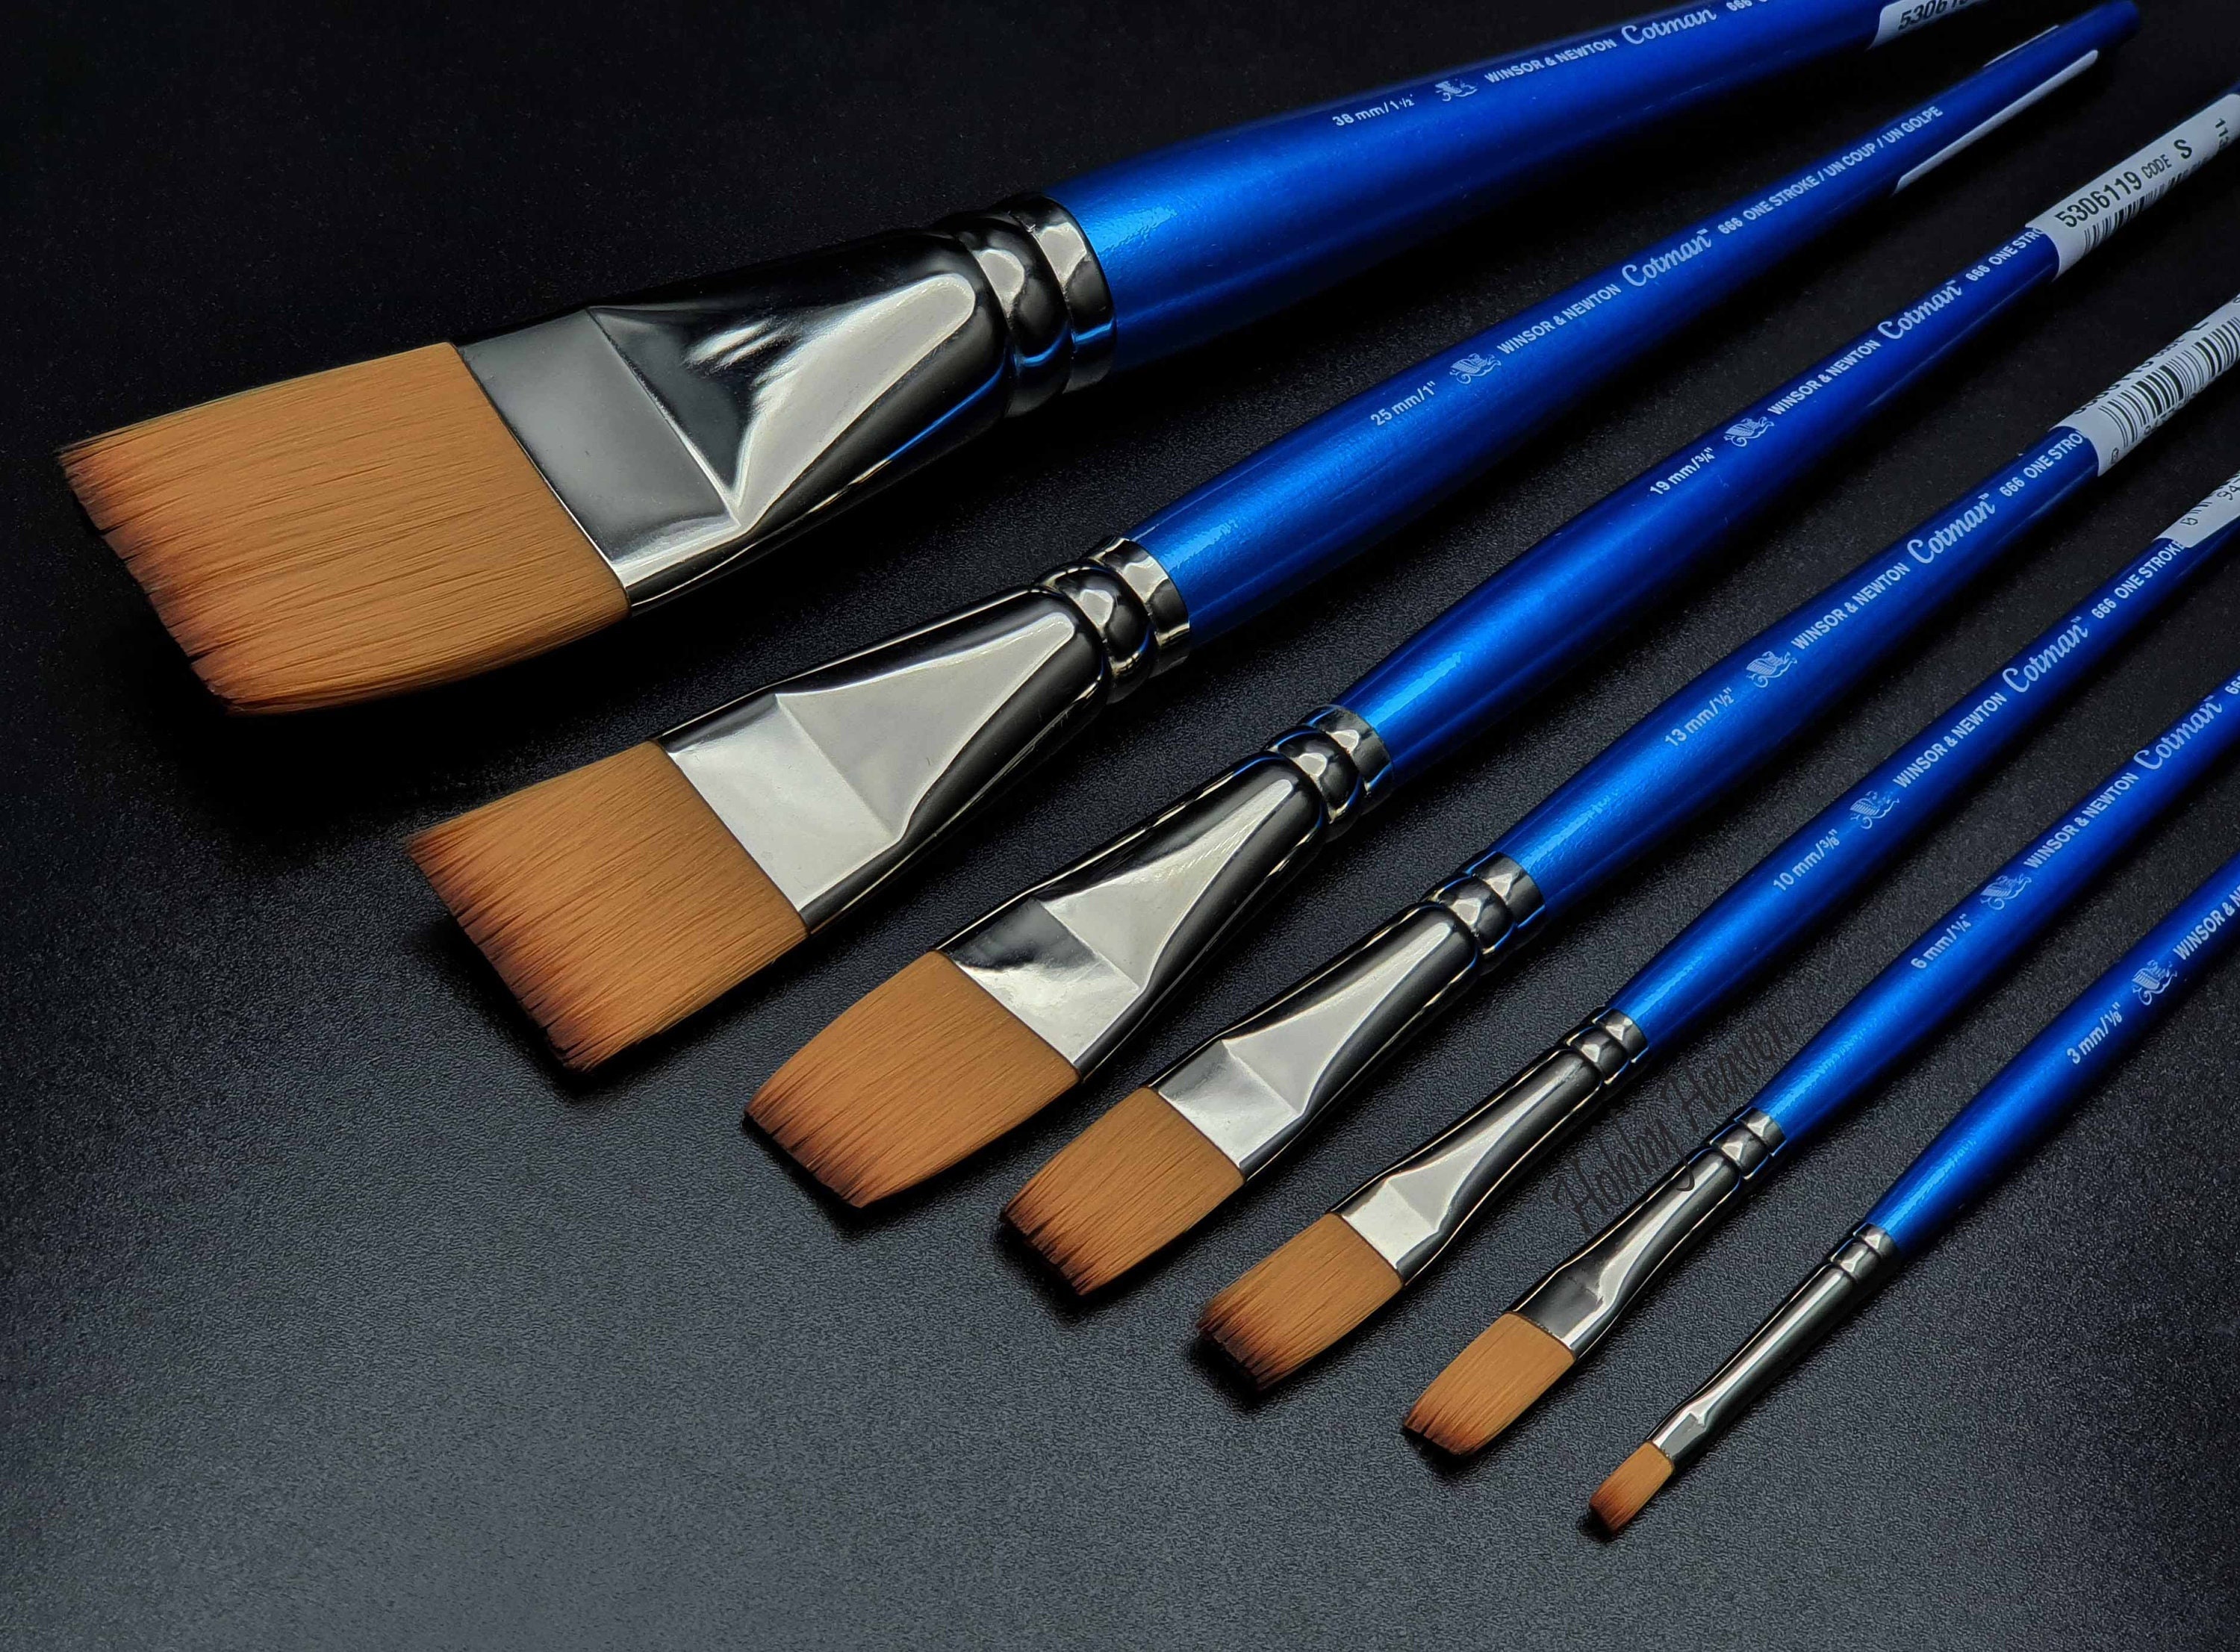 Cotman Watercolour Brush - Cotman Brush Series 668, Filbert, Short Handle,  Size 25mm - 1